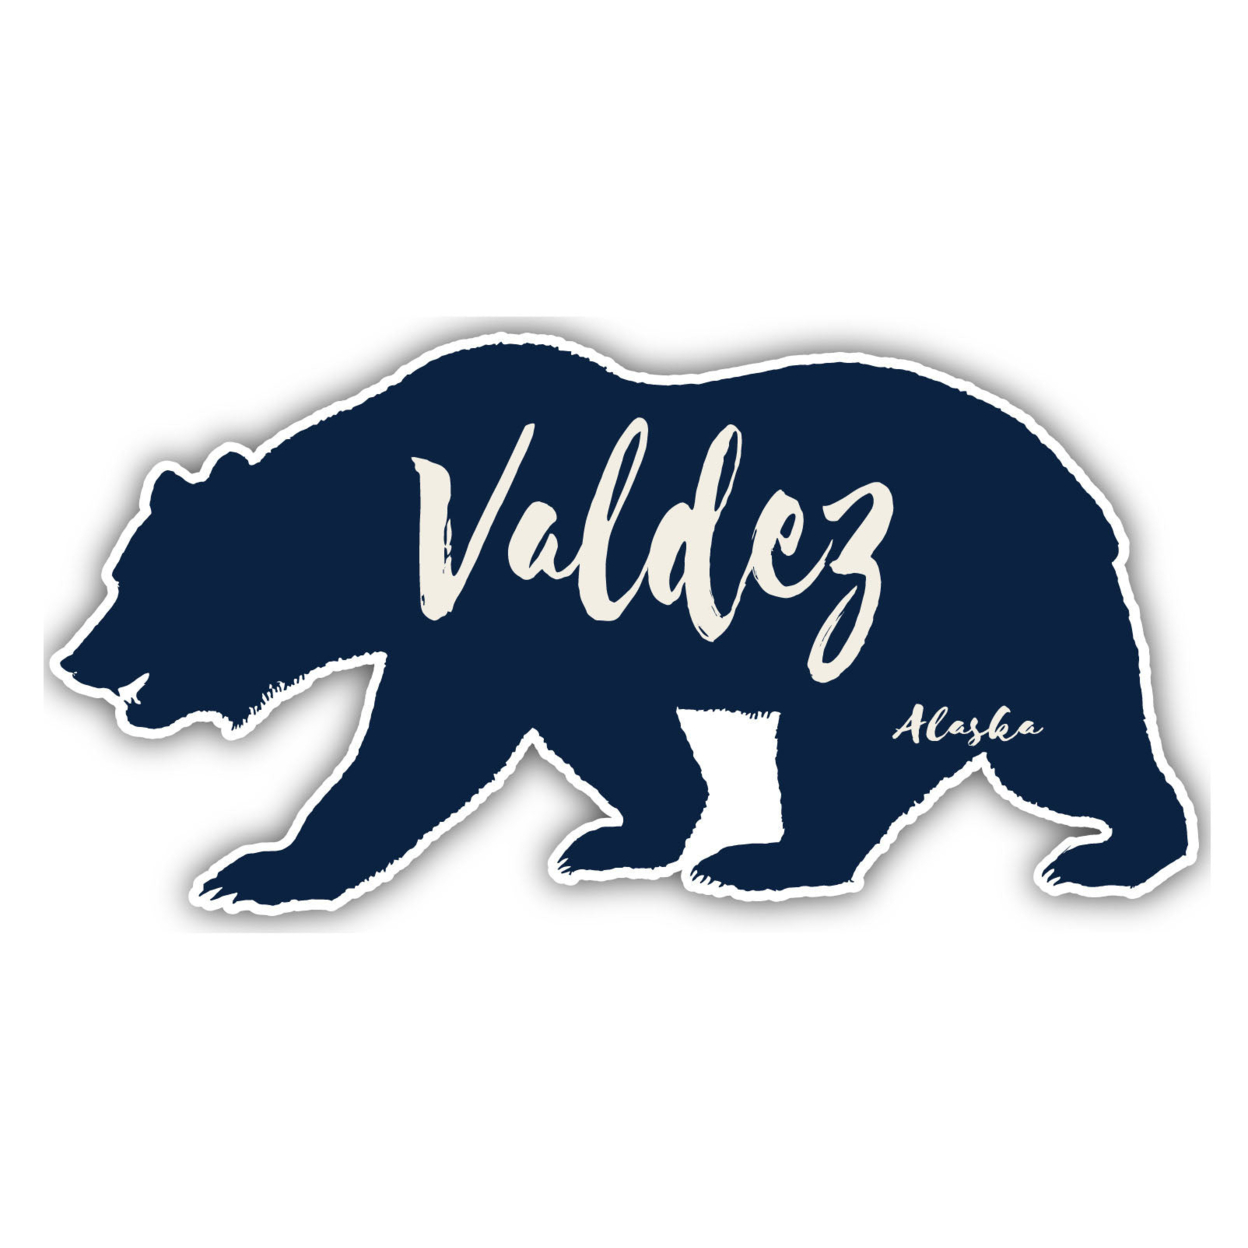 Valdez Alaska Souvenir Decorative Stickers (Choose Theme And Size) - Single Unit, 4-Inch, Great Outdoors